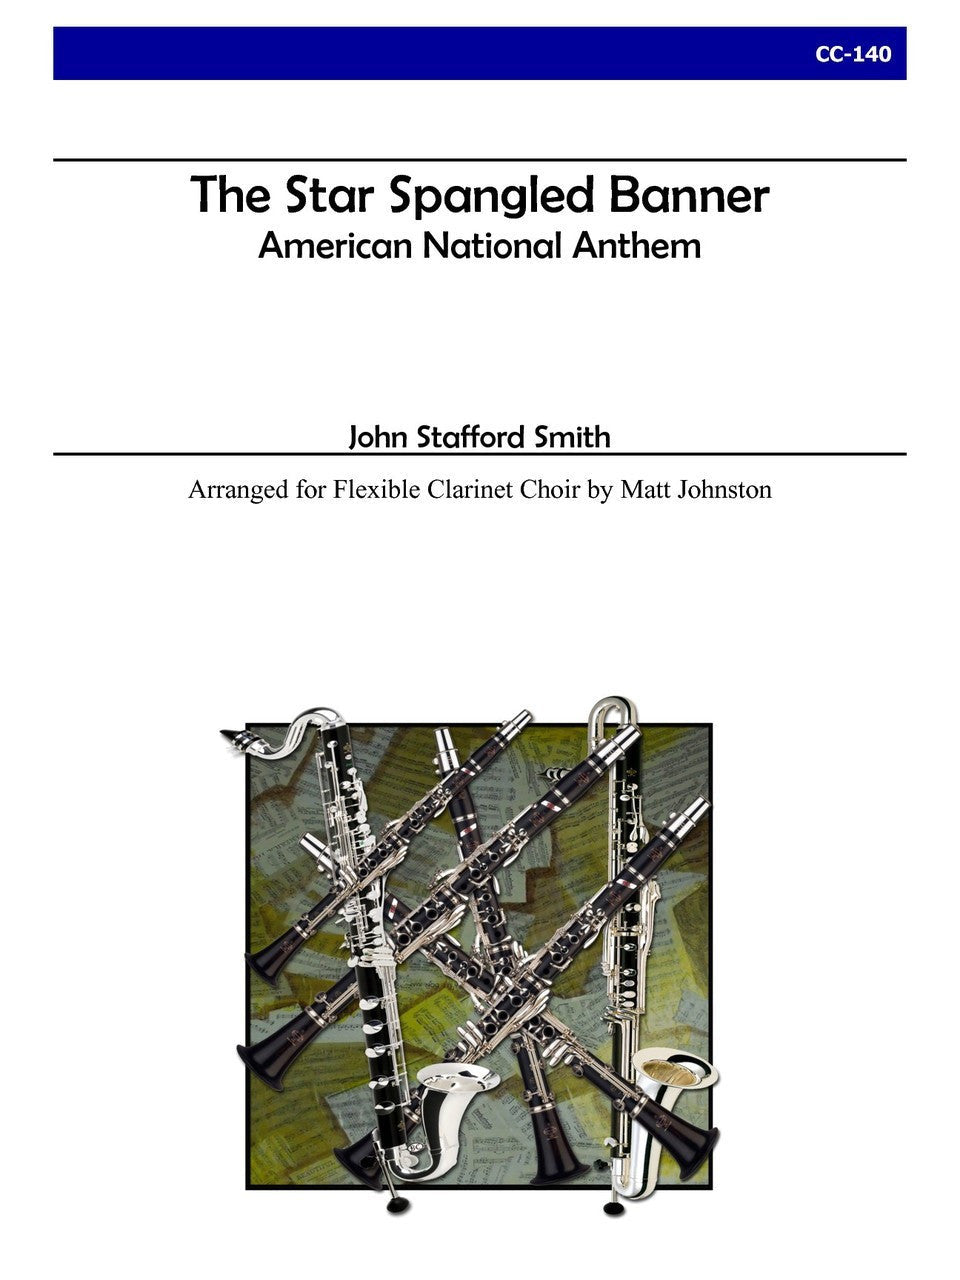 Smith (arr. Matt Johnston) - The Star Spangled Banner for Clarinet Choir